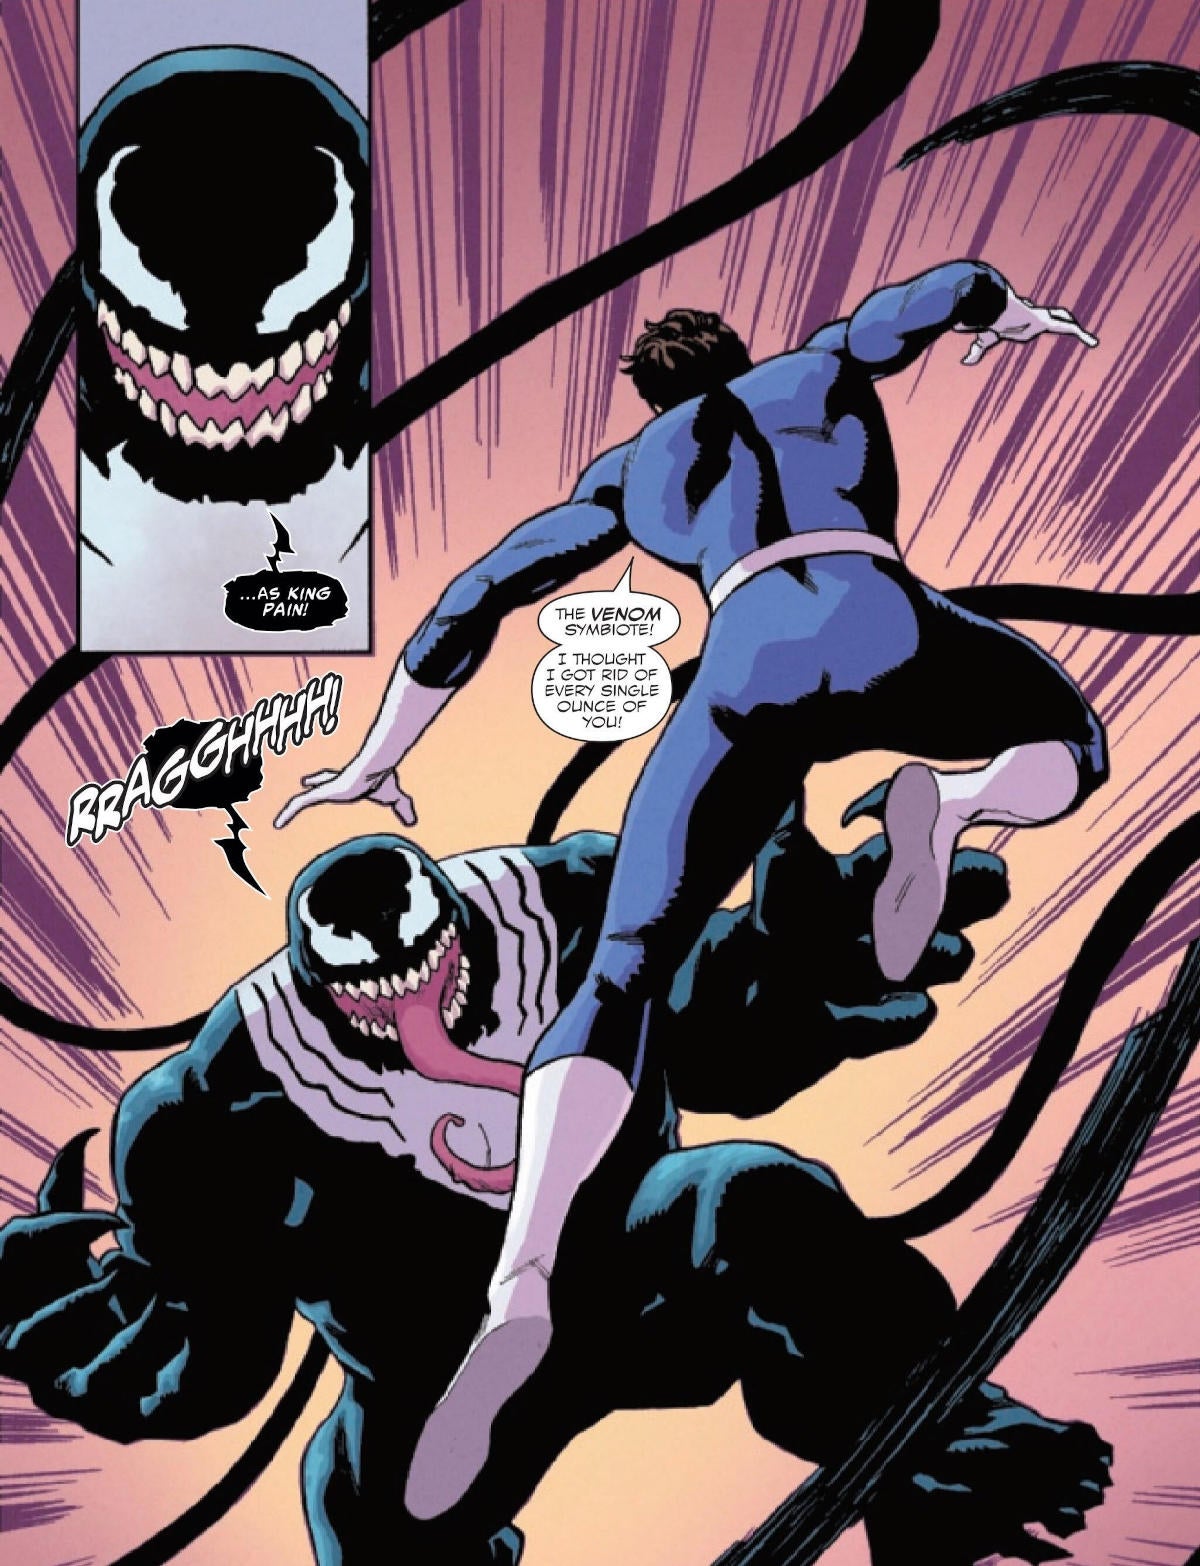 venom-kingpin-king-pain-vs-spider-man-peter-parker-extreme-venomverse-5.jpg